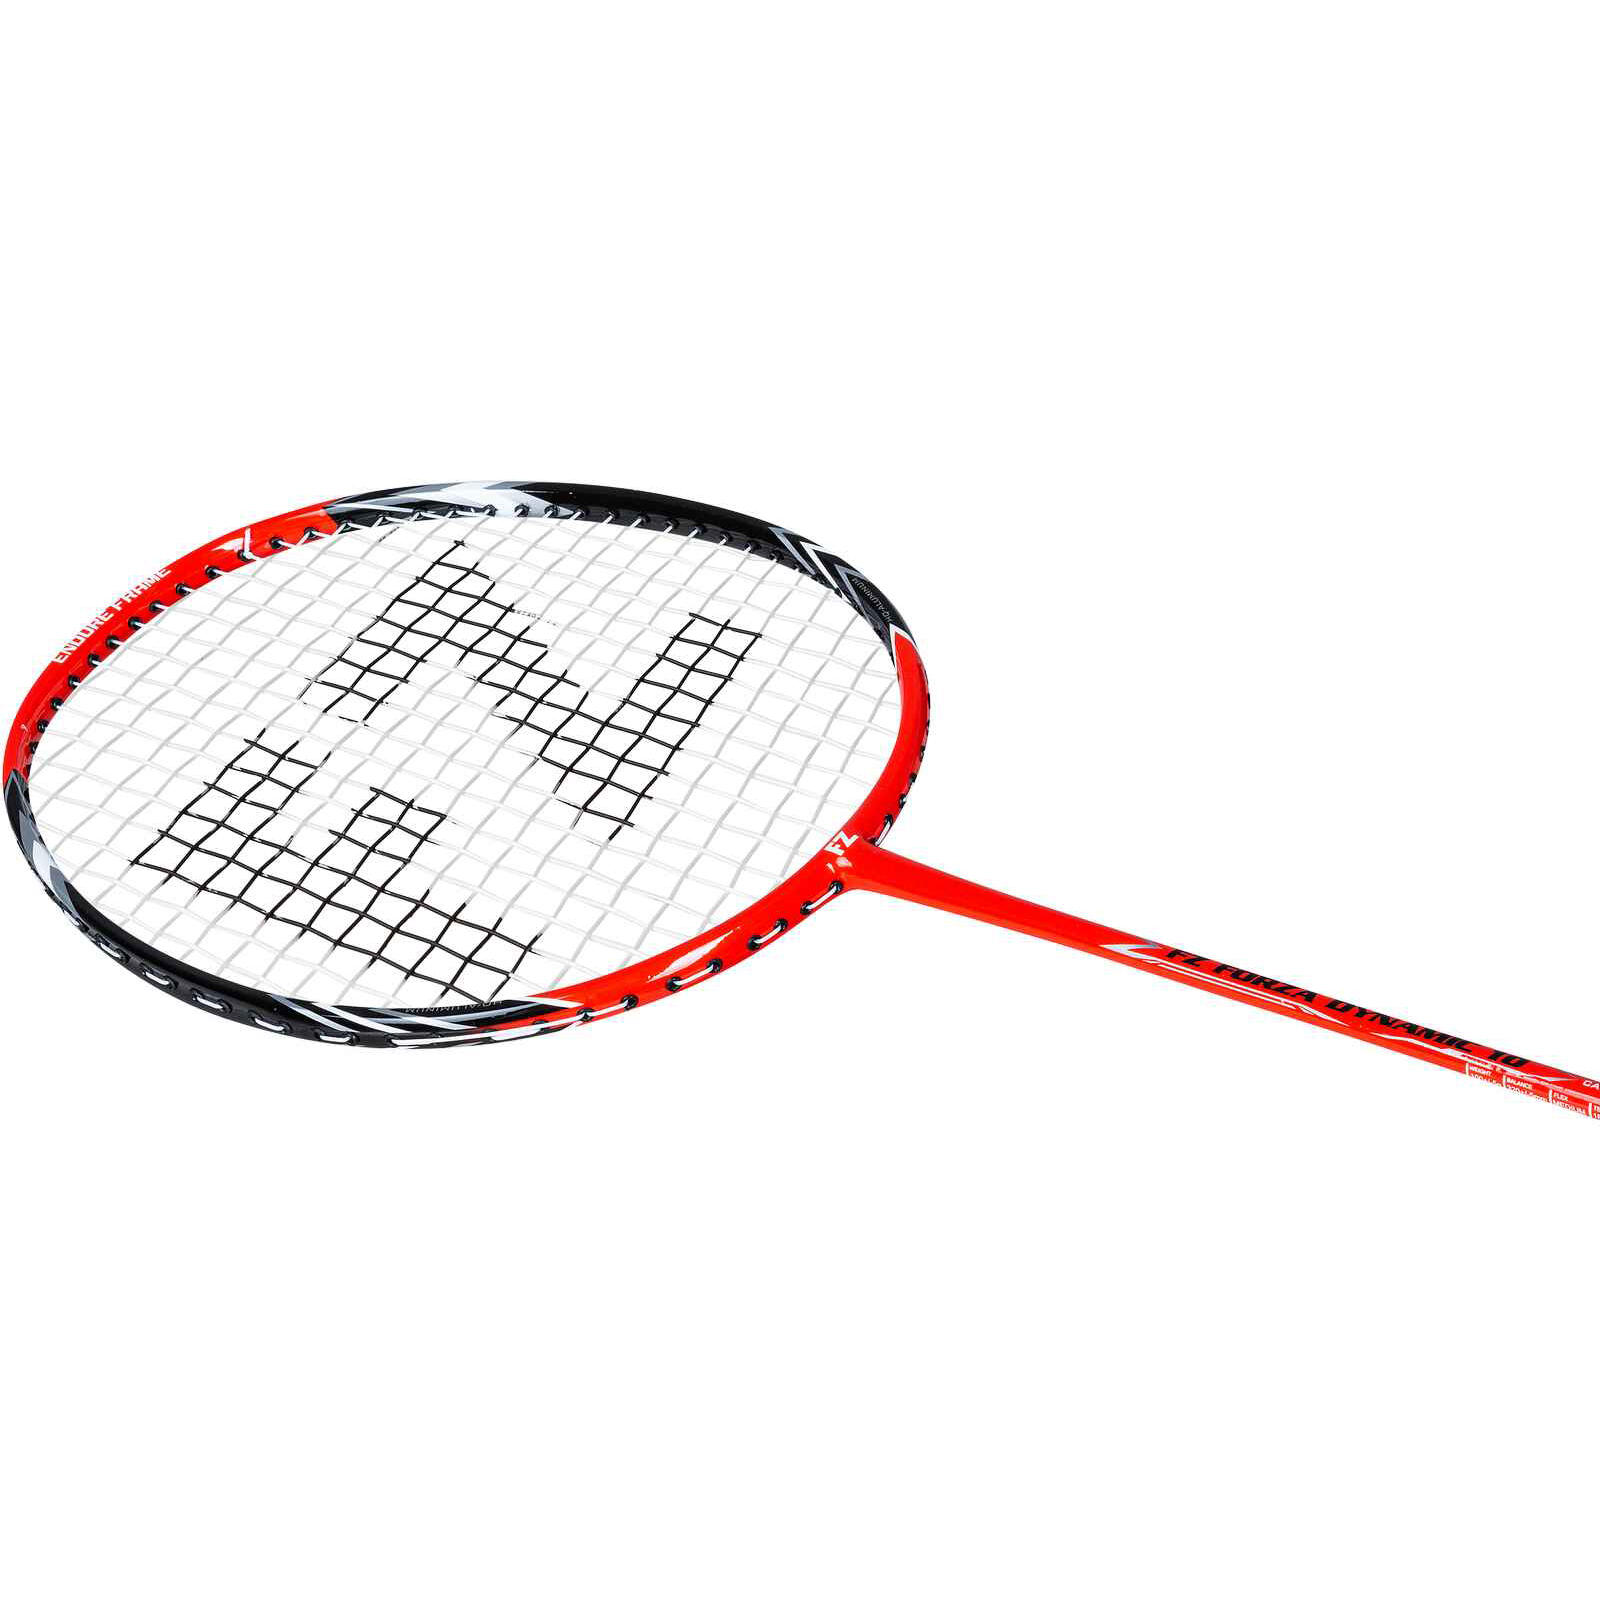 Forza Dynamic 10 Badminton Racket 3/6